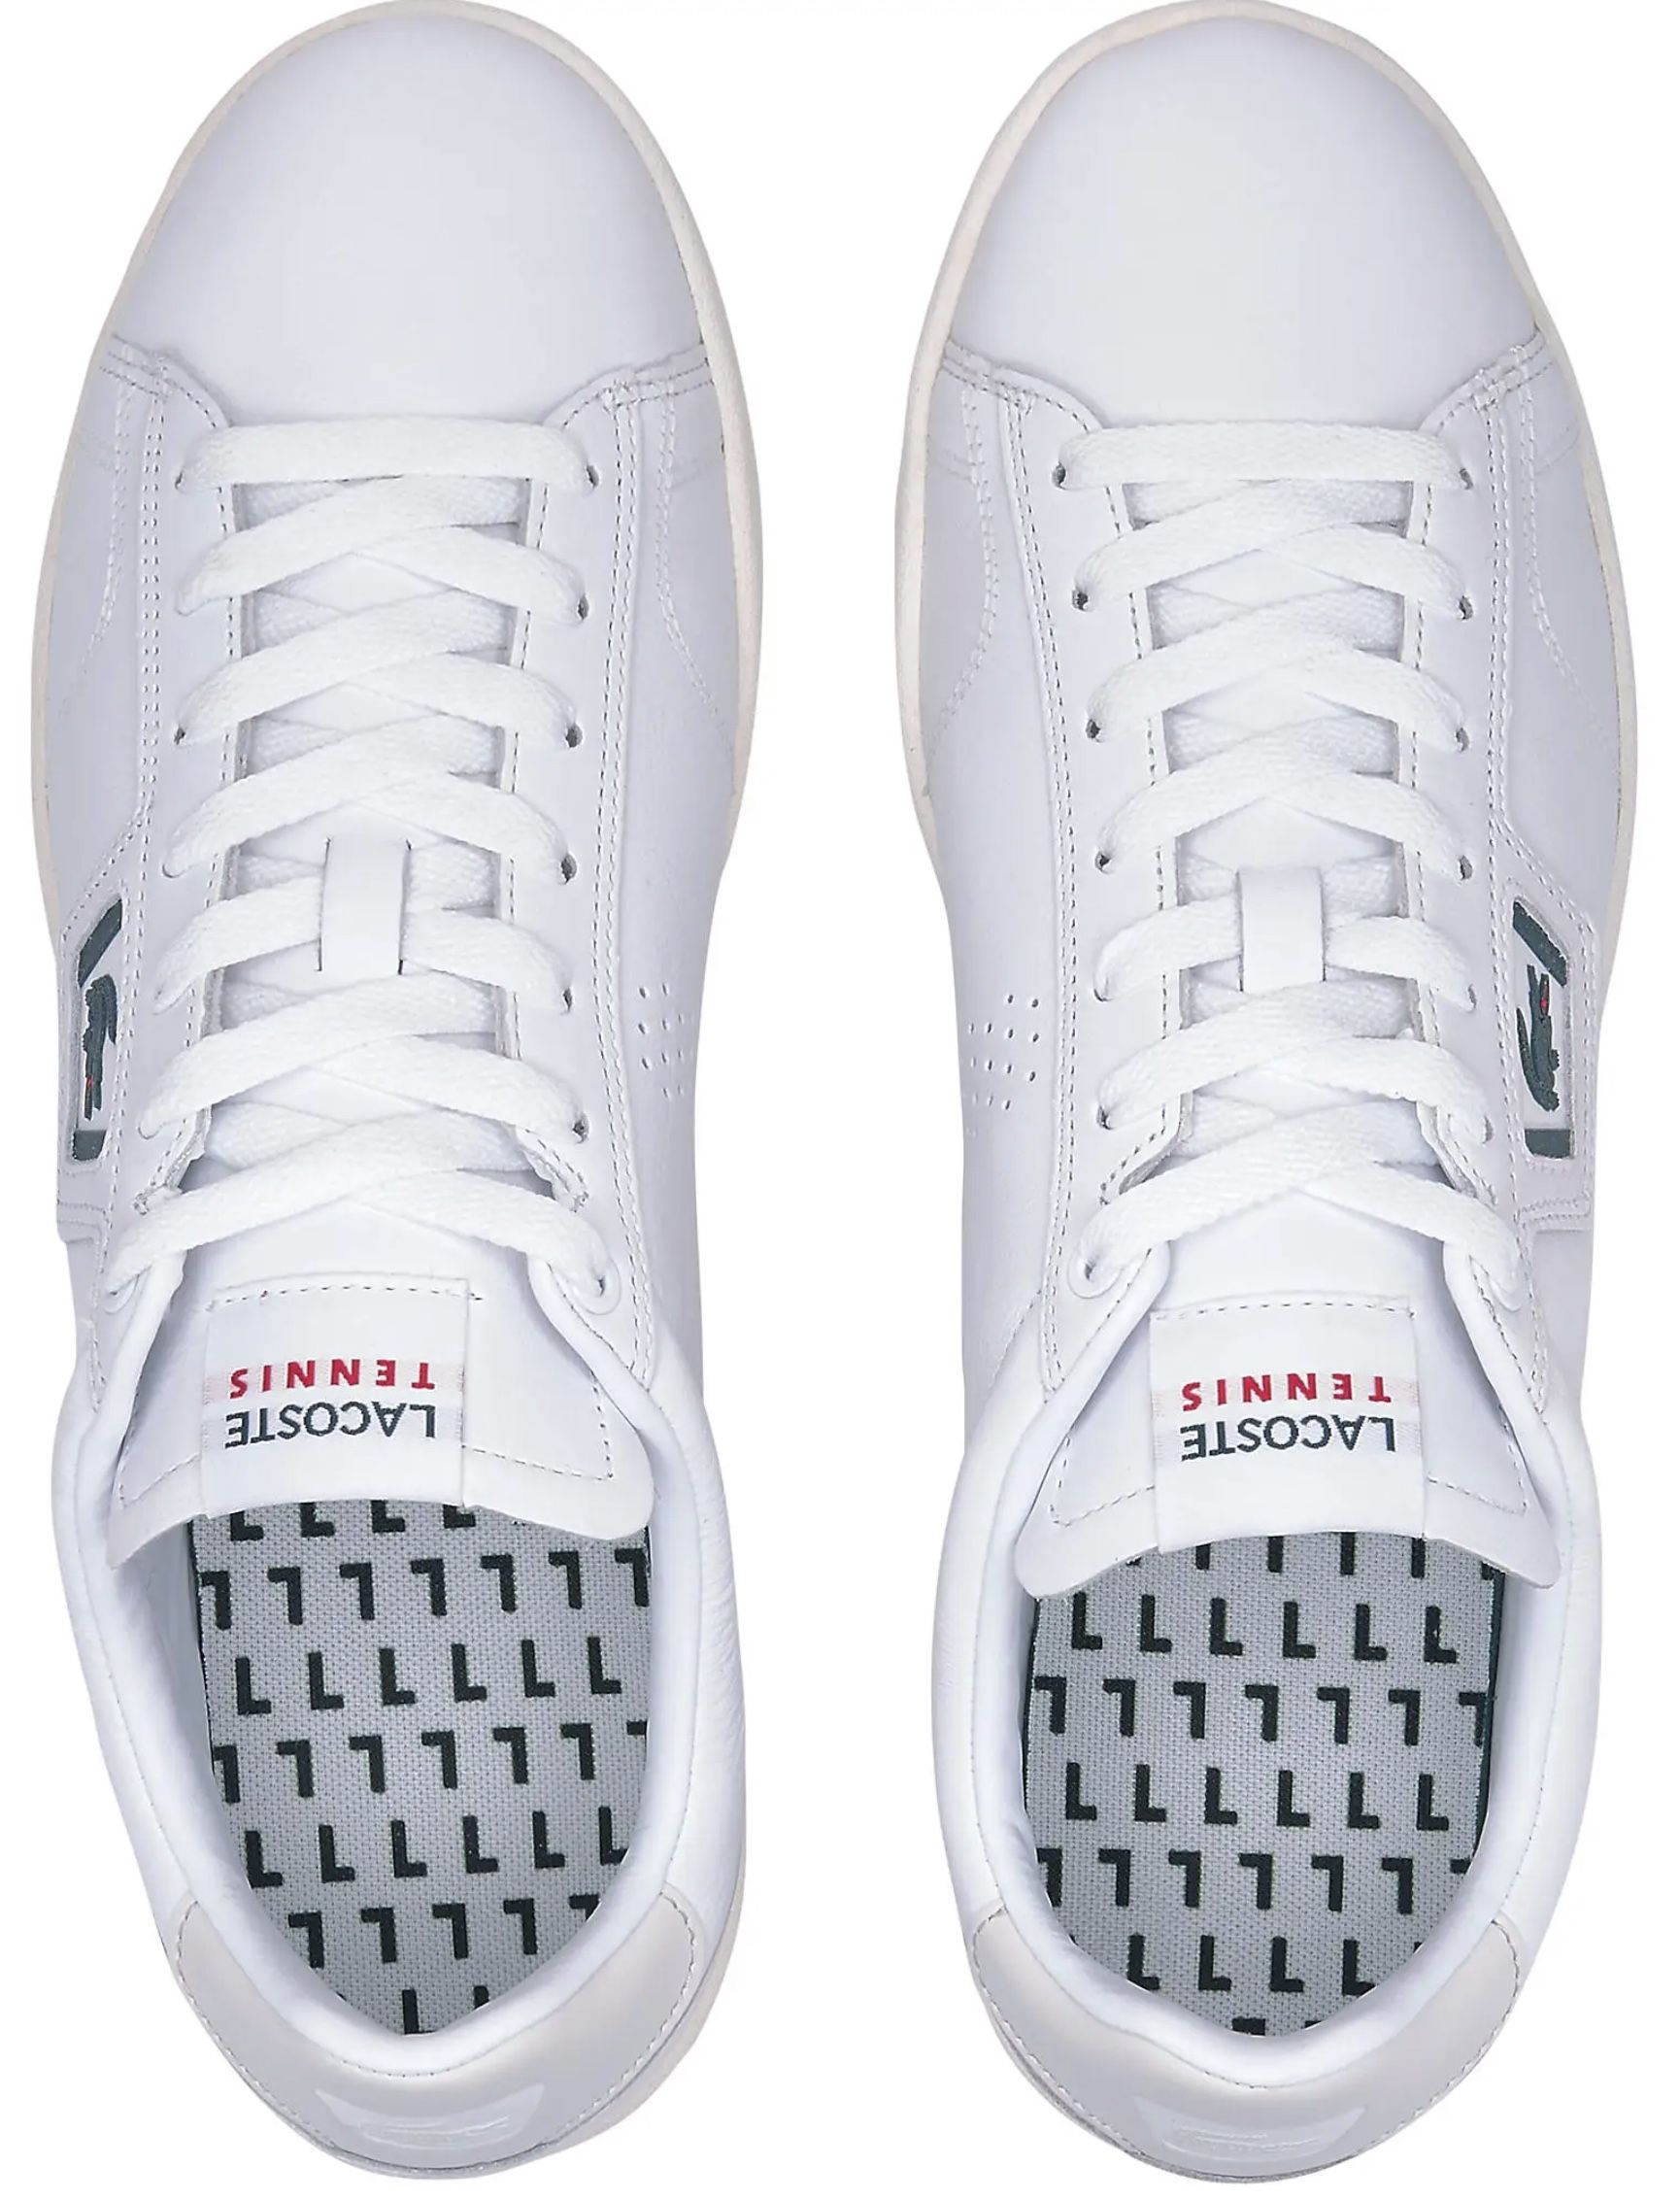 Lacoste Masters Classic Sneaker in Weiß für 54€ (statt 78€)